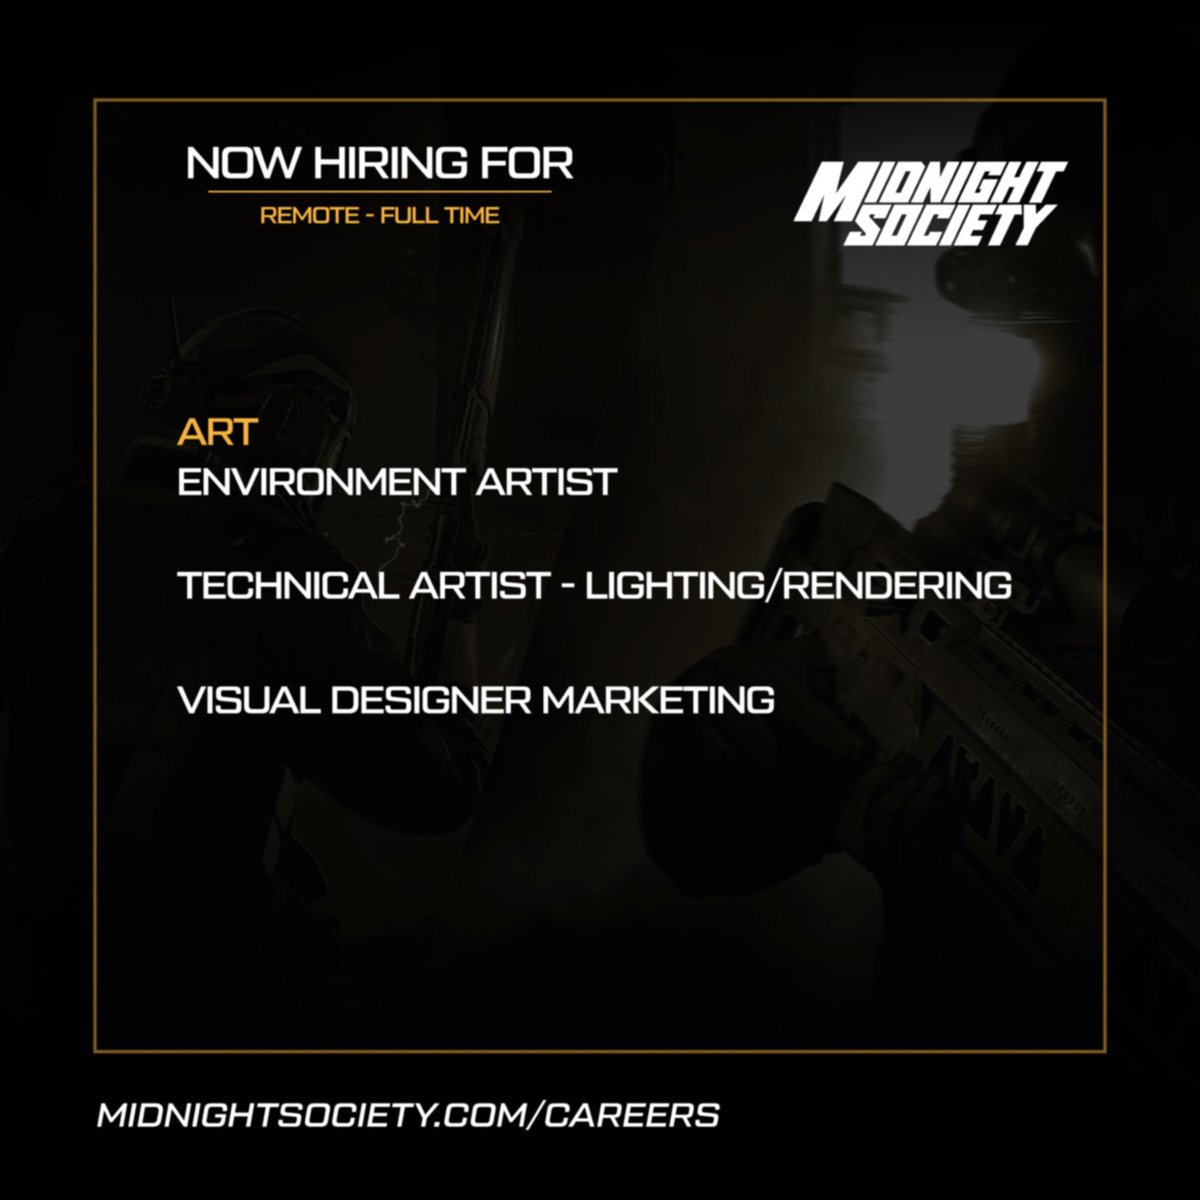 Now hiring for Art: Environment Artist Technical Artist - Lighting/Rendering Visual Designer Marketing Apply now: midnightsociety.com/careers